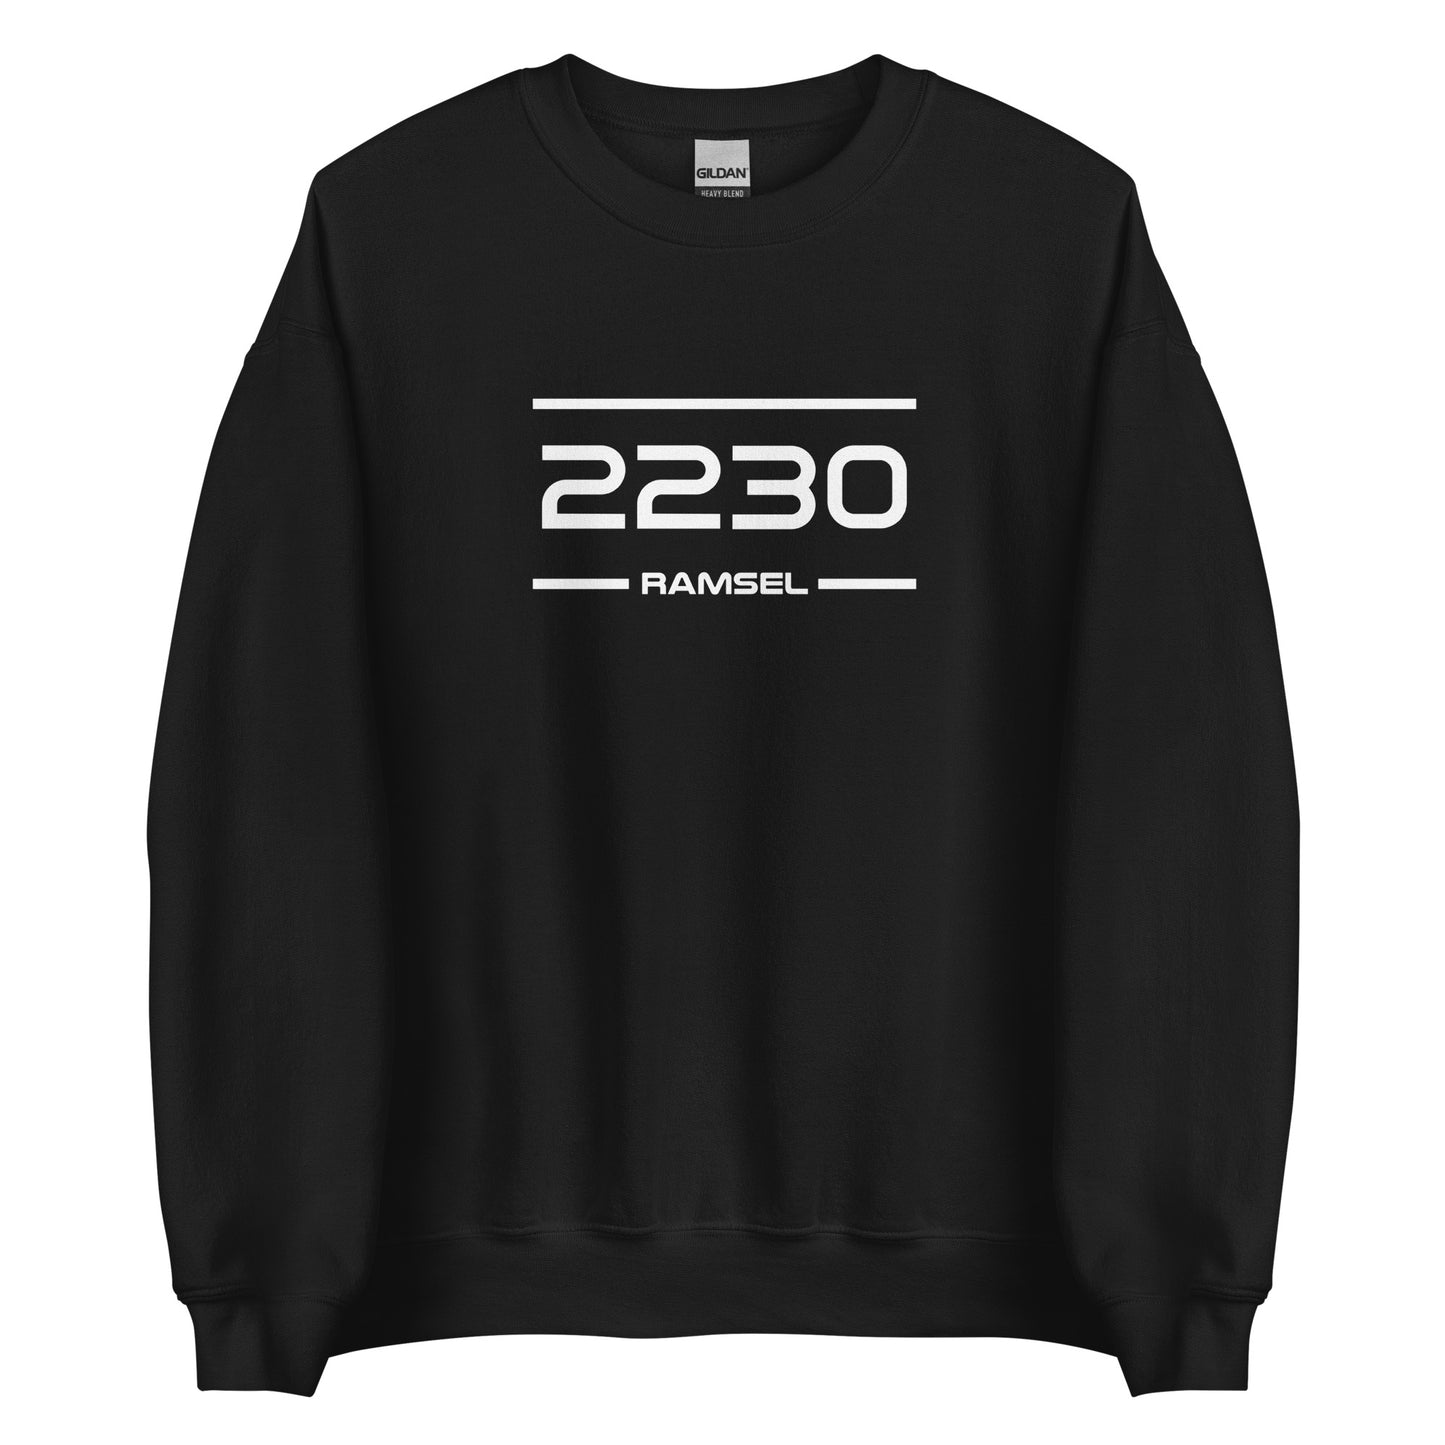 Sweater - 2230 - Ramsel (M/V)